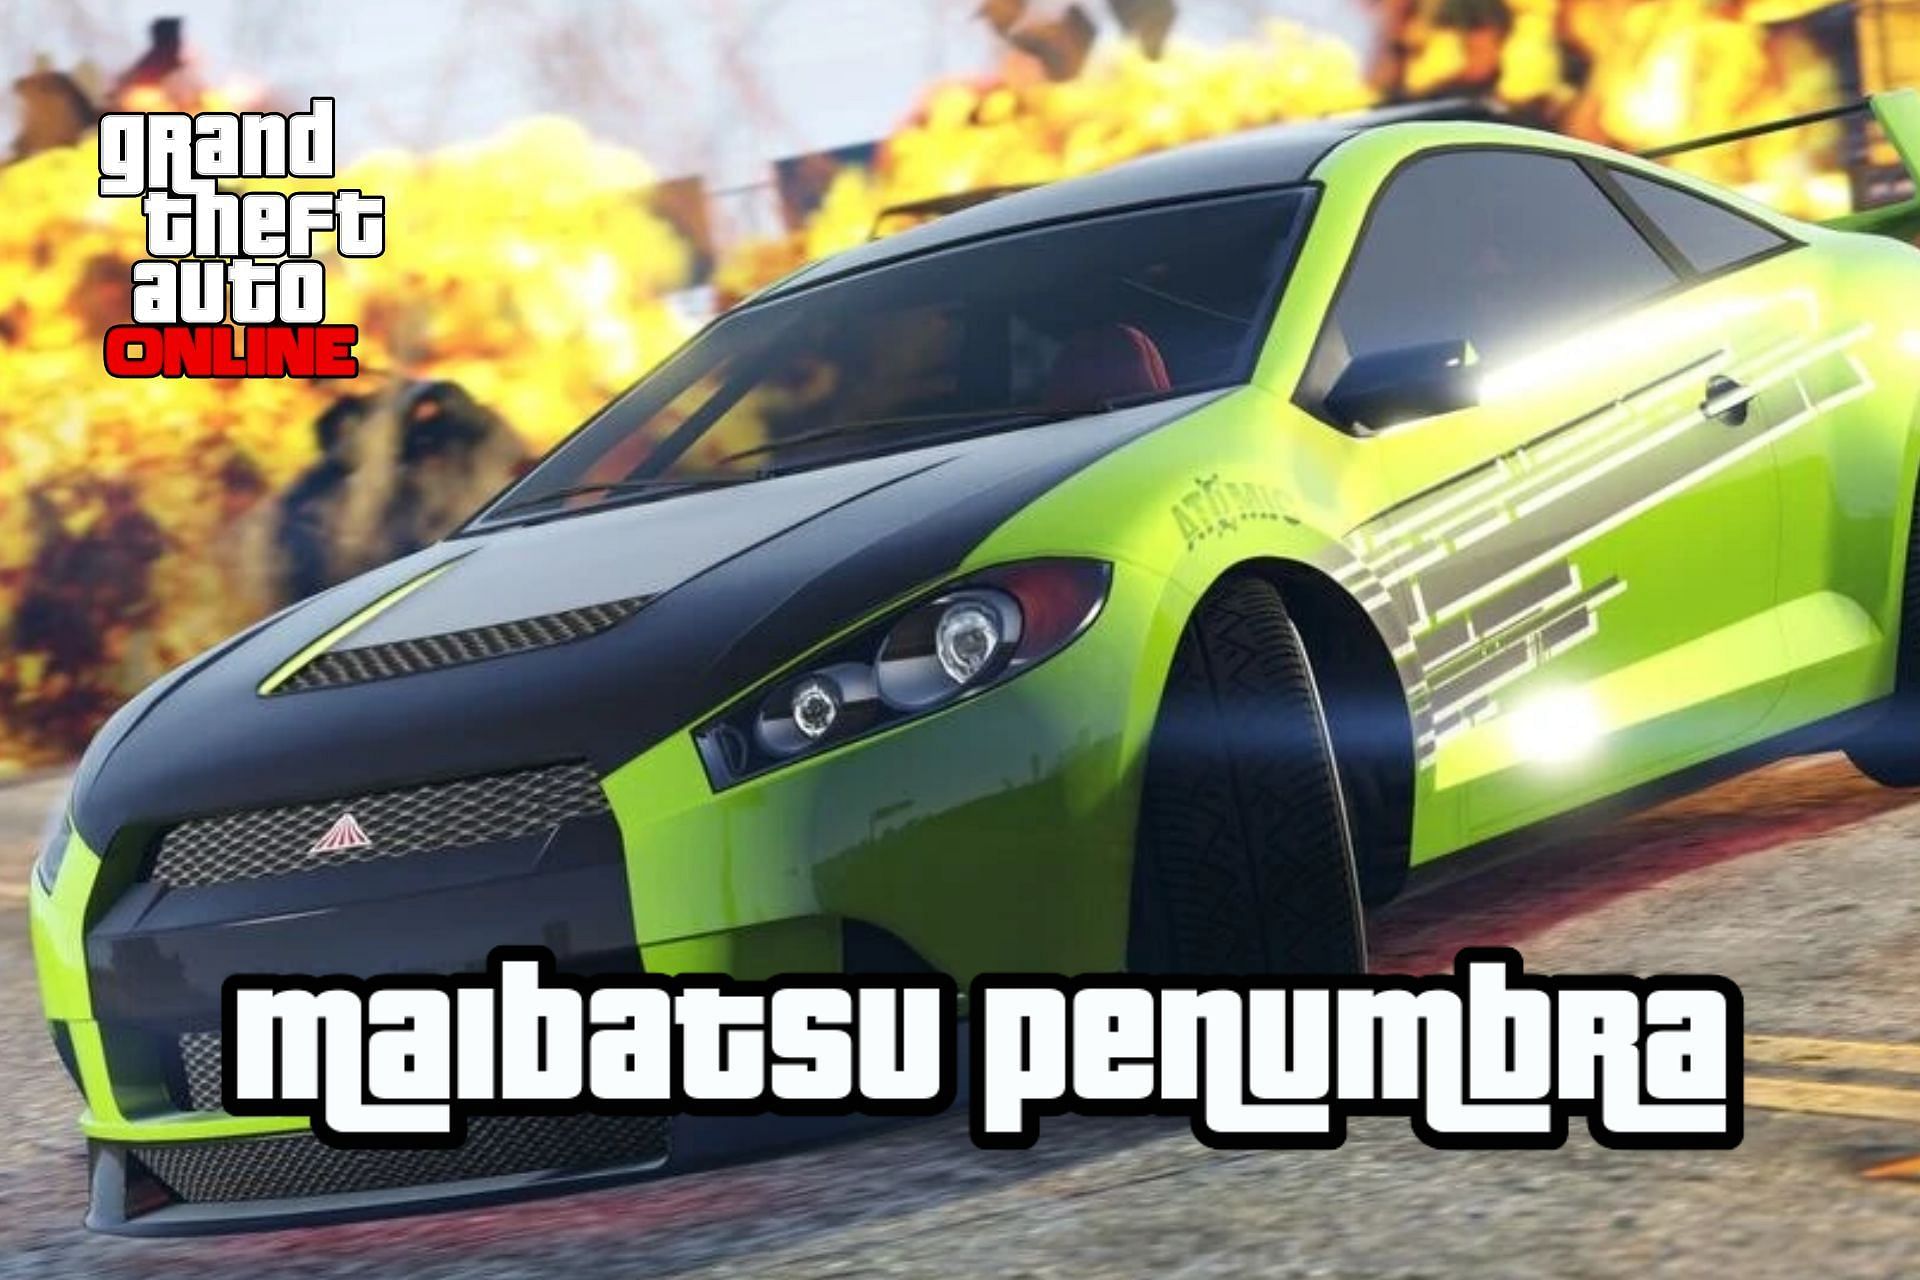 Is it worthwhile to buy the Maibatsu Penumbra in GTA Online? (Image via GTA Fandom)